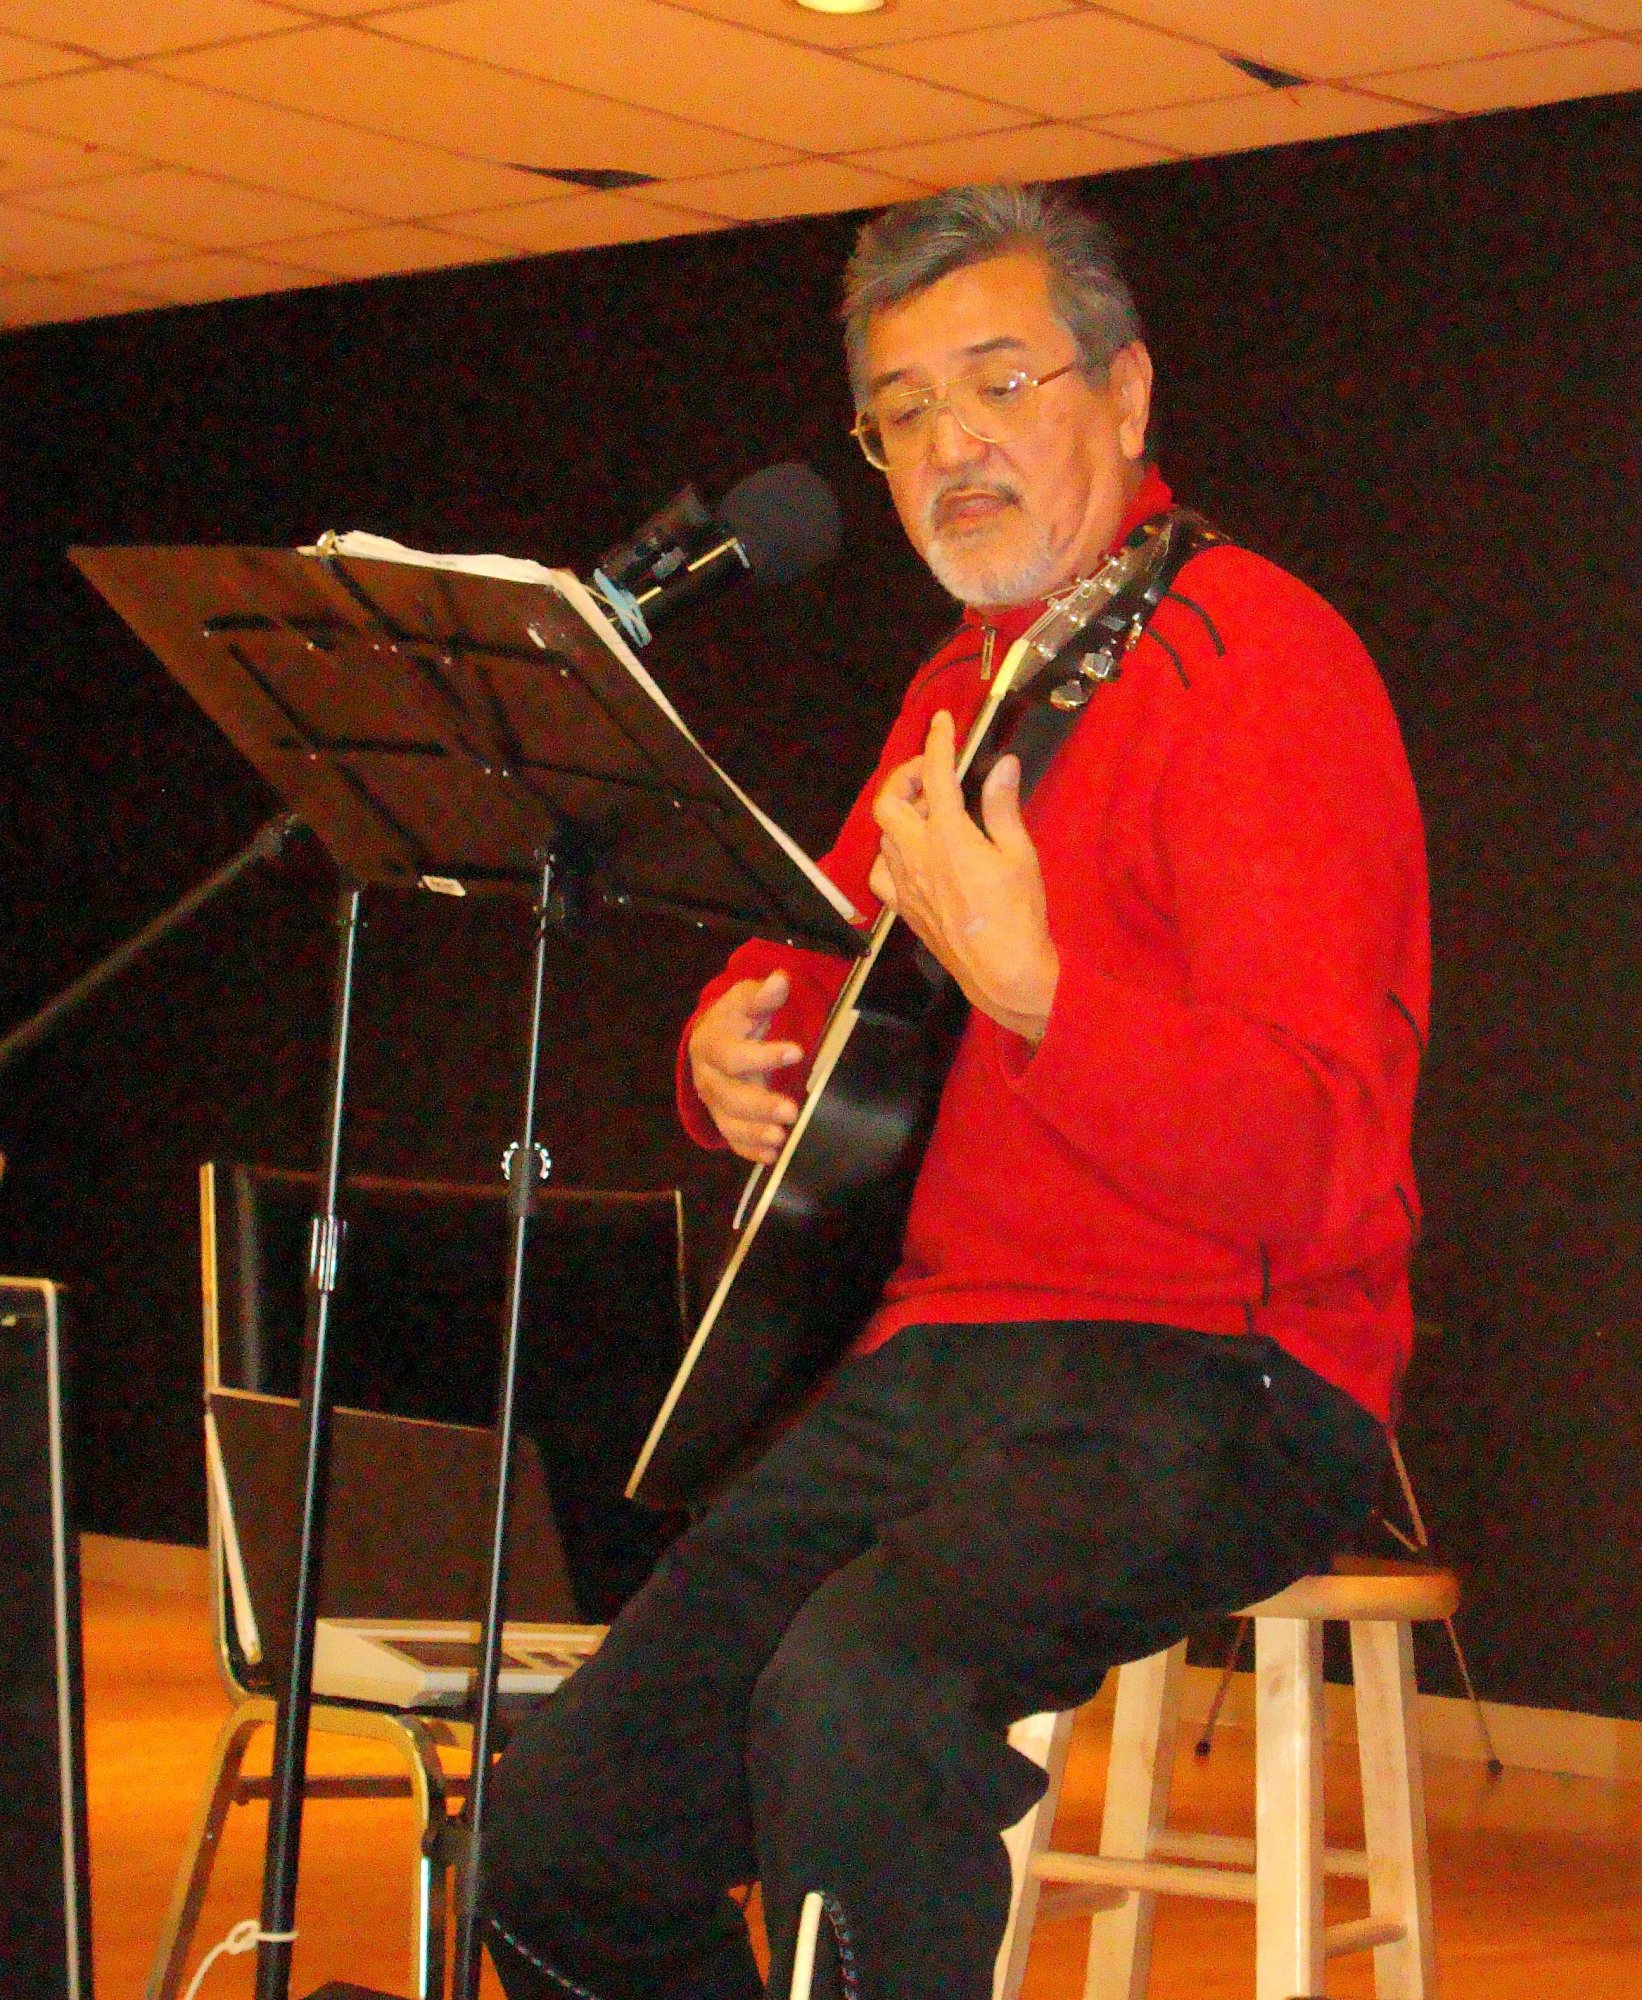 Ron da Roza, Singer, Guitarist 1 Dec. 2011